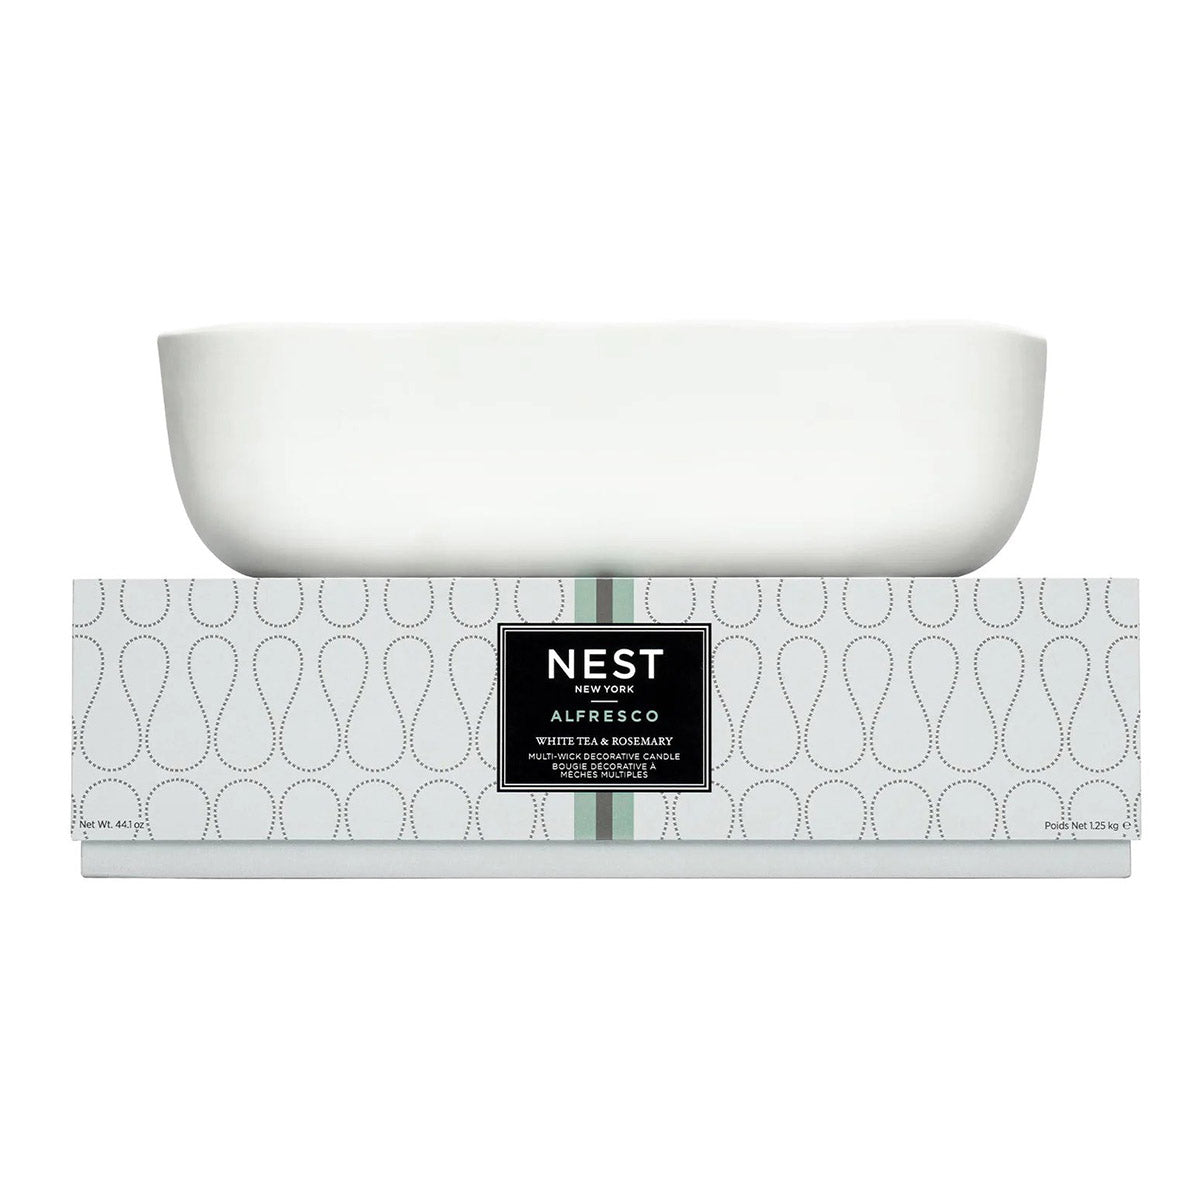 Nest Fragrances White Tea & Rosemary Multi-Wick Decorative Candle